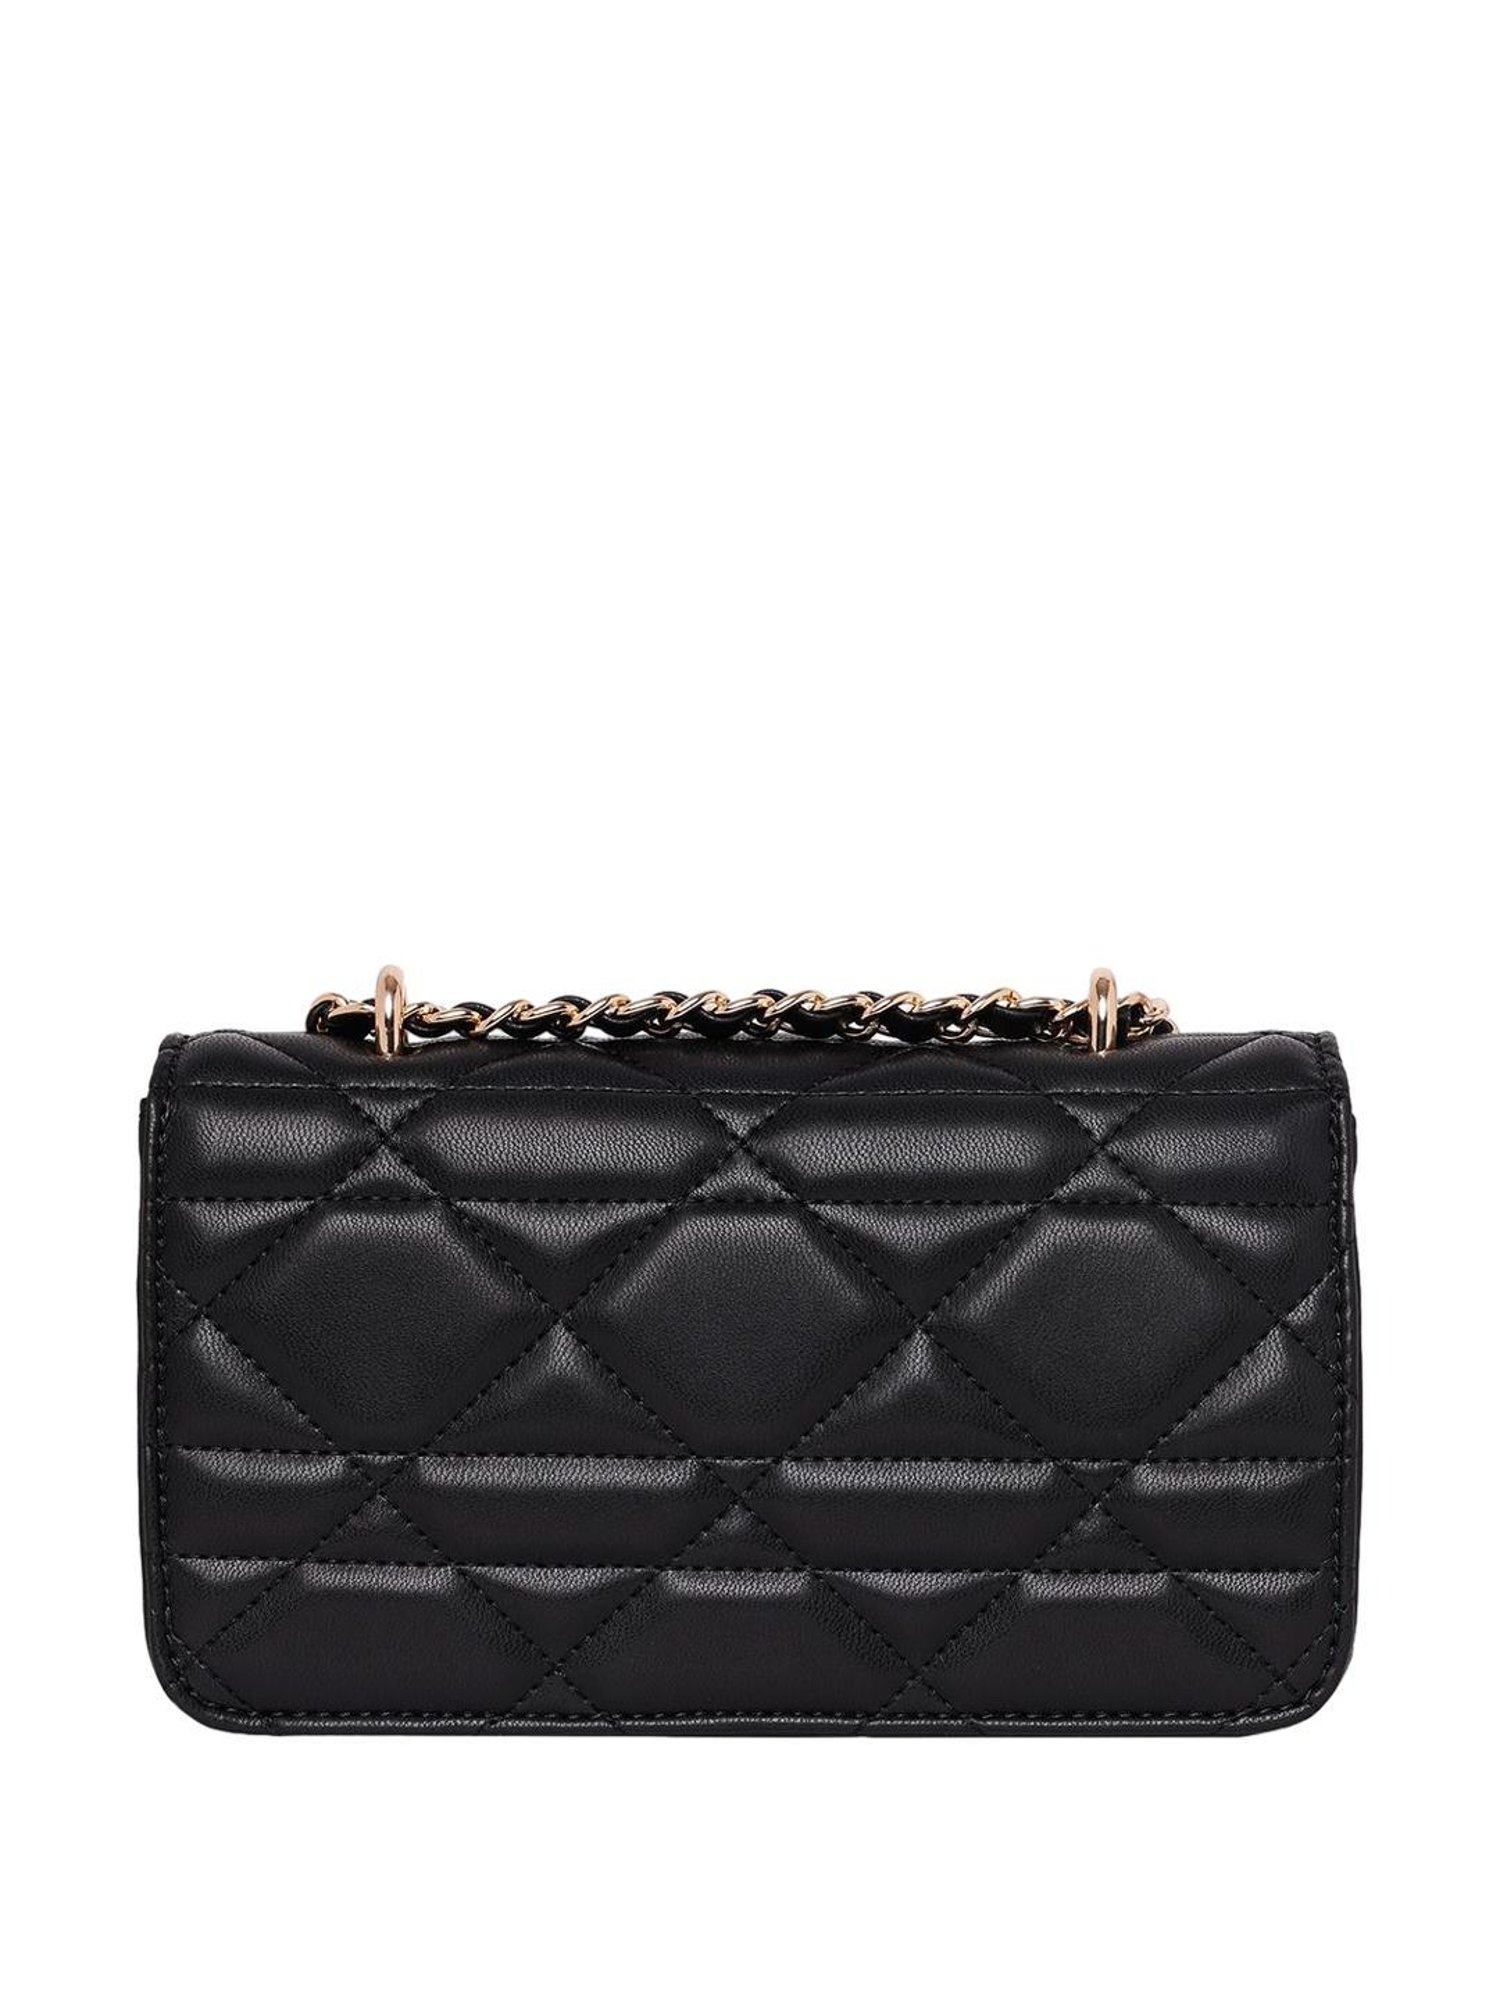 Cassandre matelassé leather wallet on chain in black - Saint Laurent |  Mytheresa